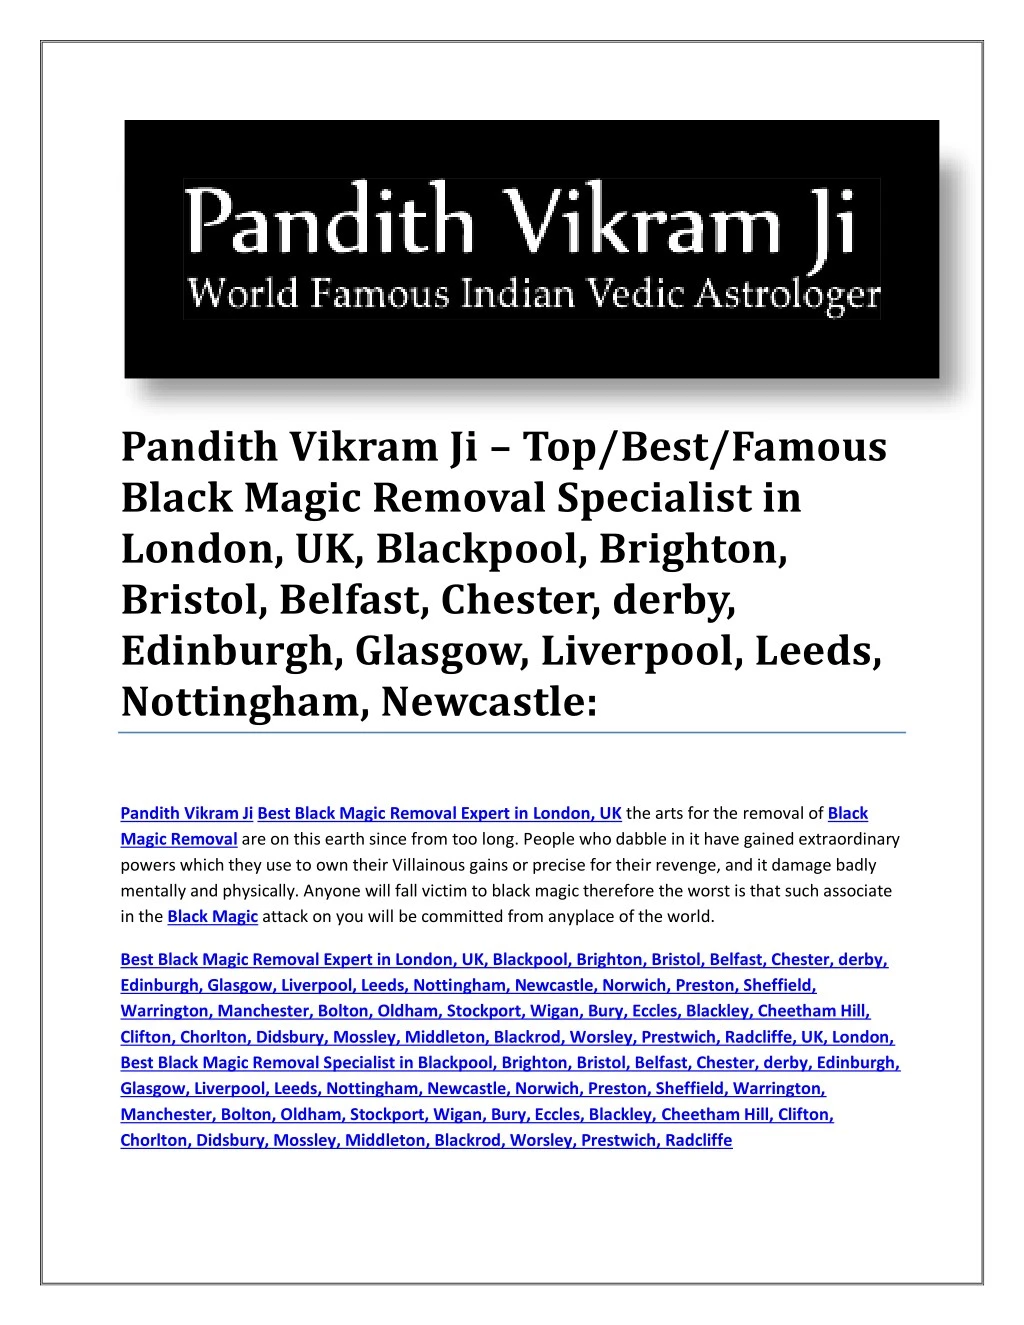 pandith vikram ji top best famous black magic